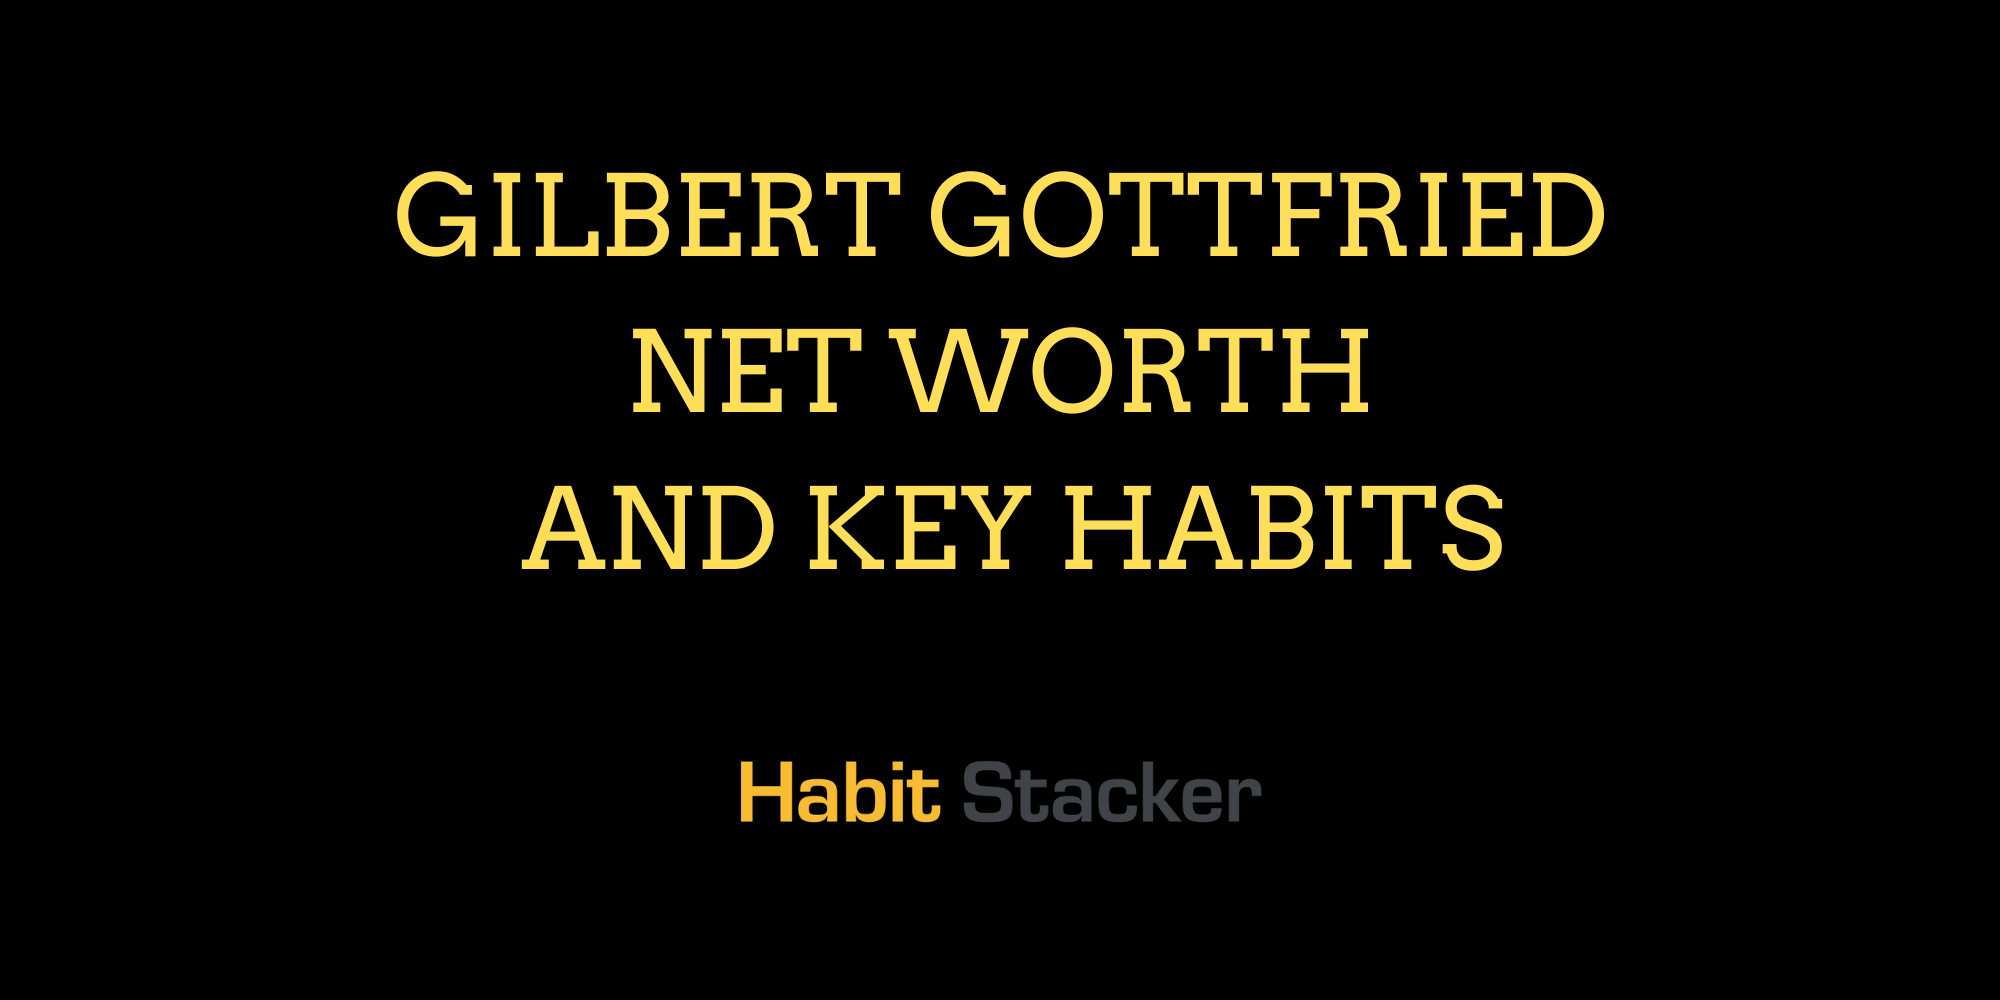 Gilbert Gottfried Net Worth and Key Habits